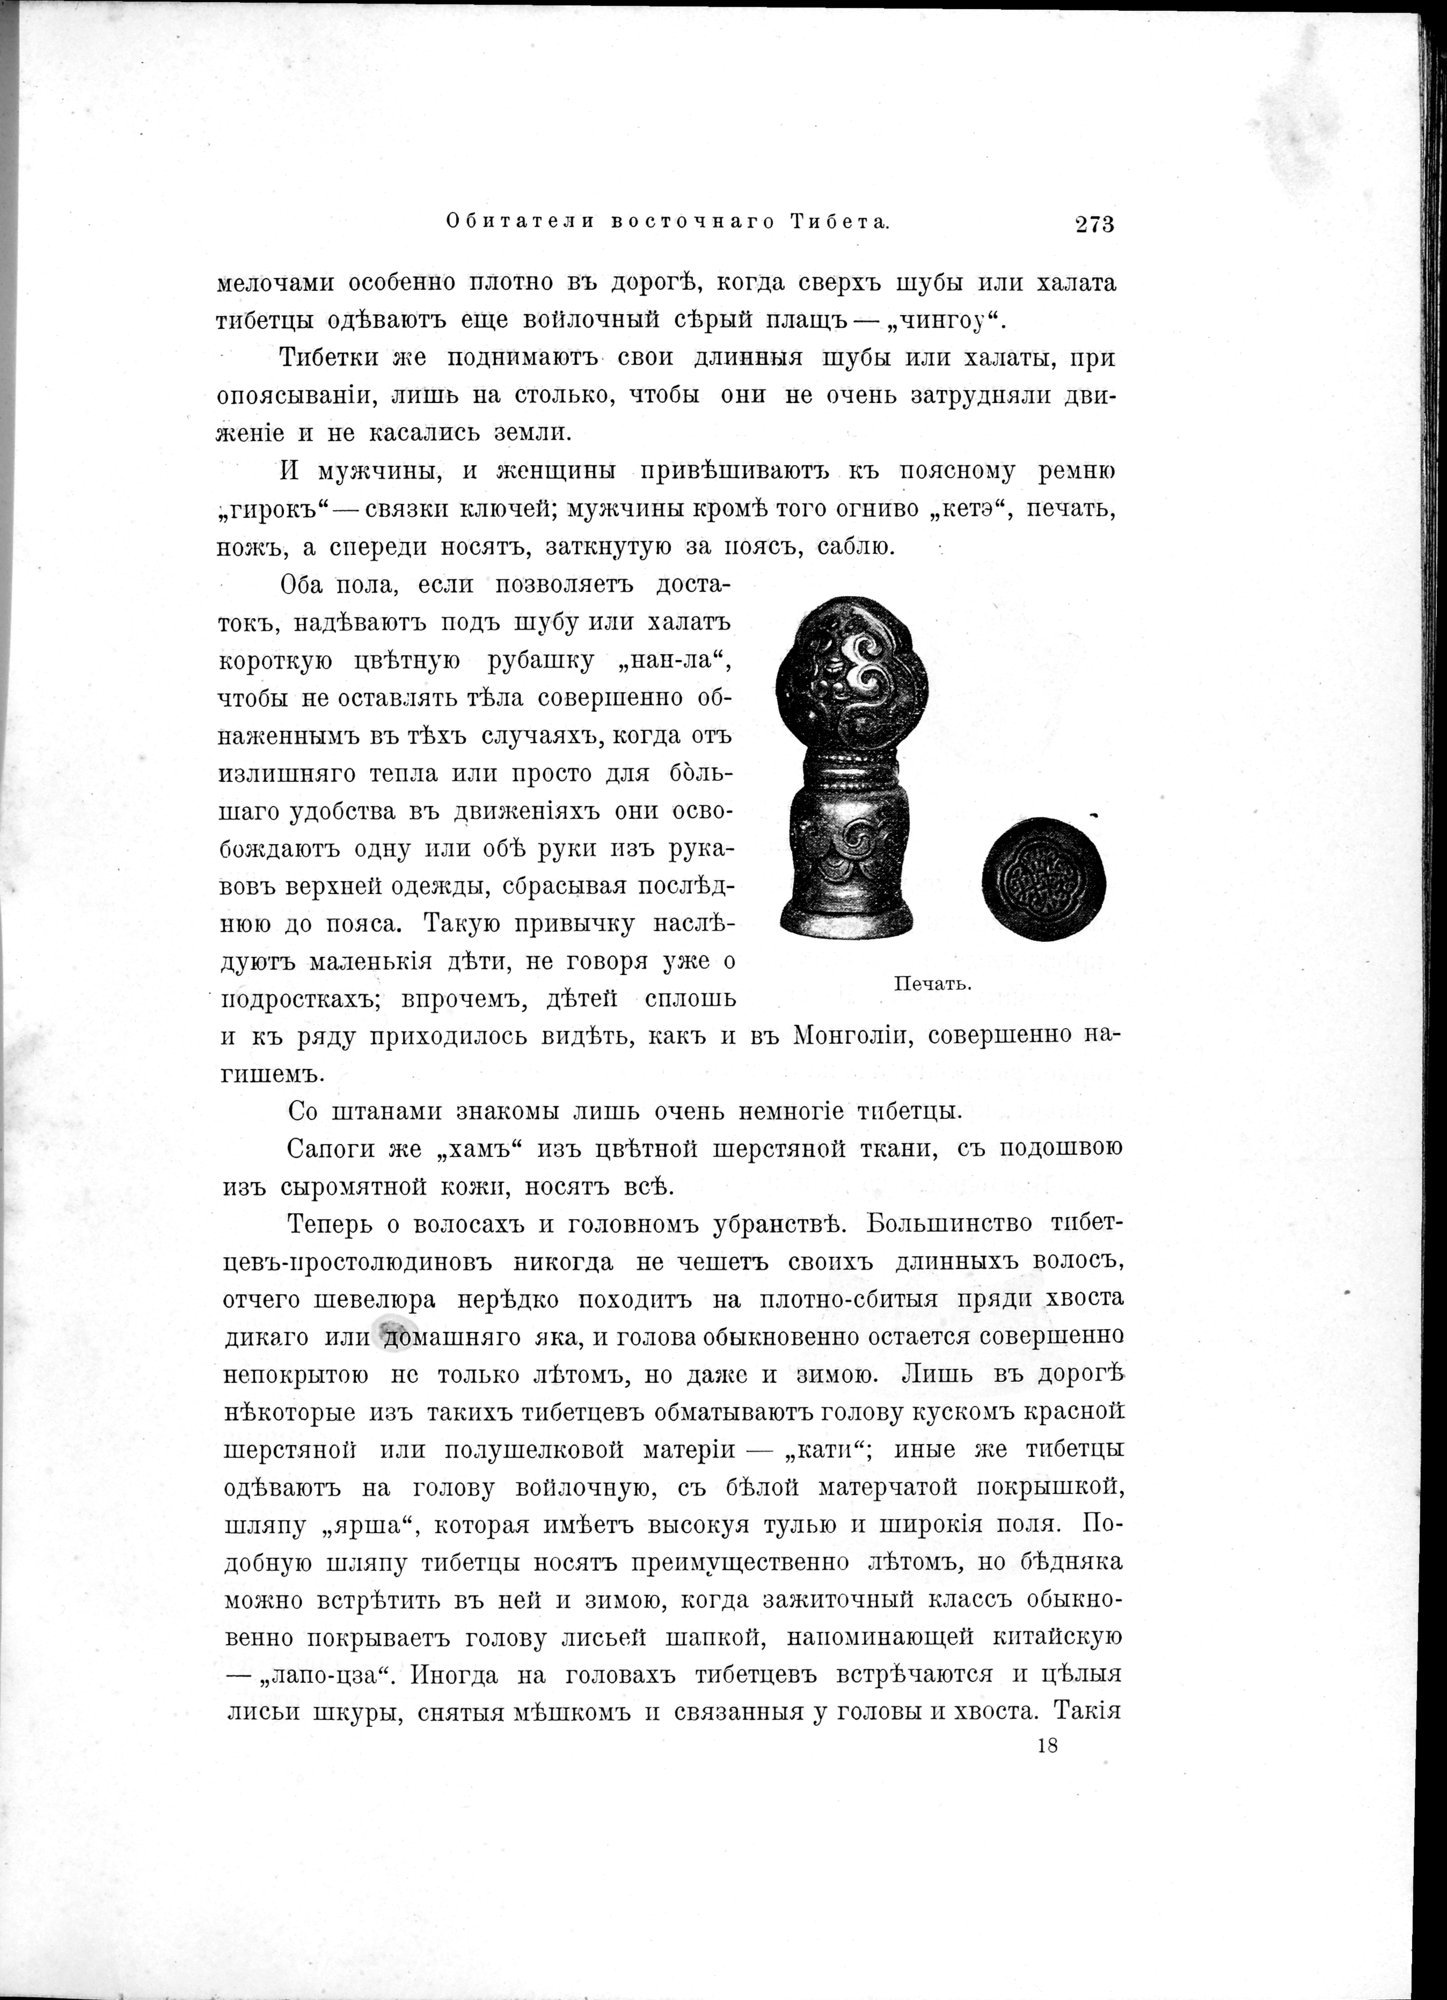 Mongoliia i Kam : vol.2 / Page 37 (Grayscale High Resolution Image)